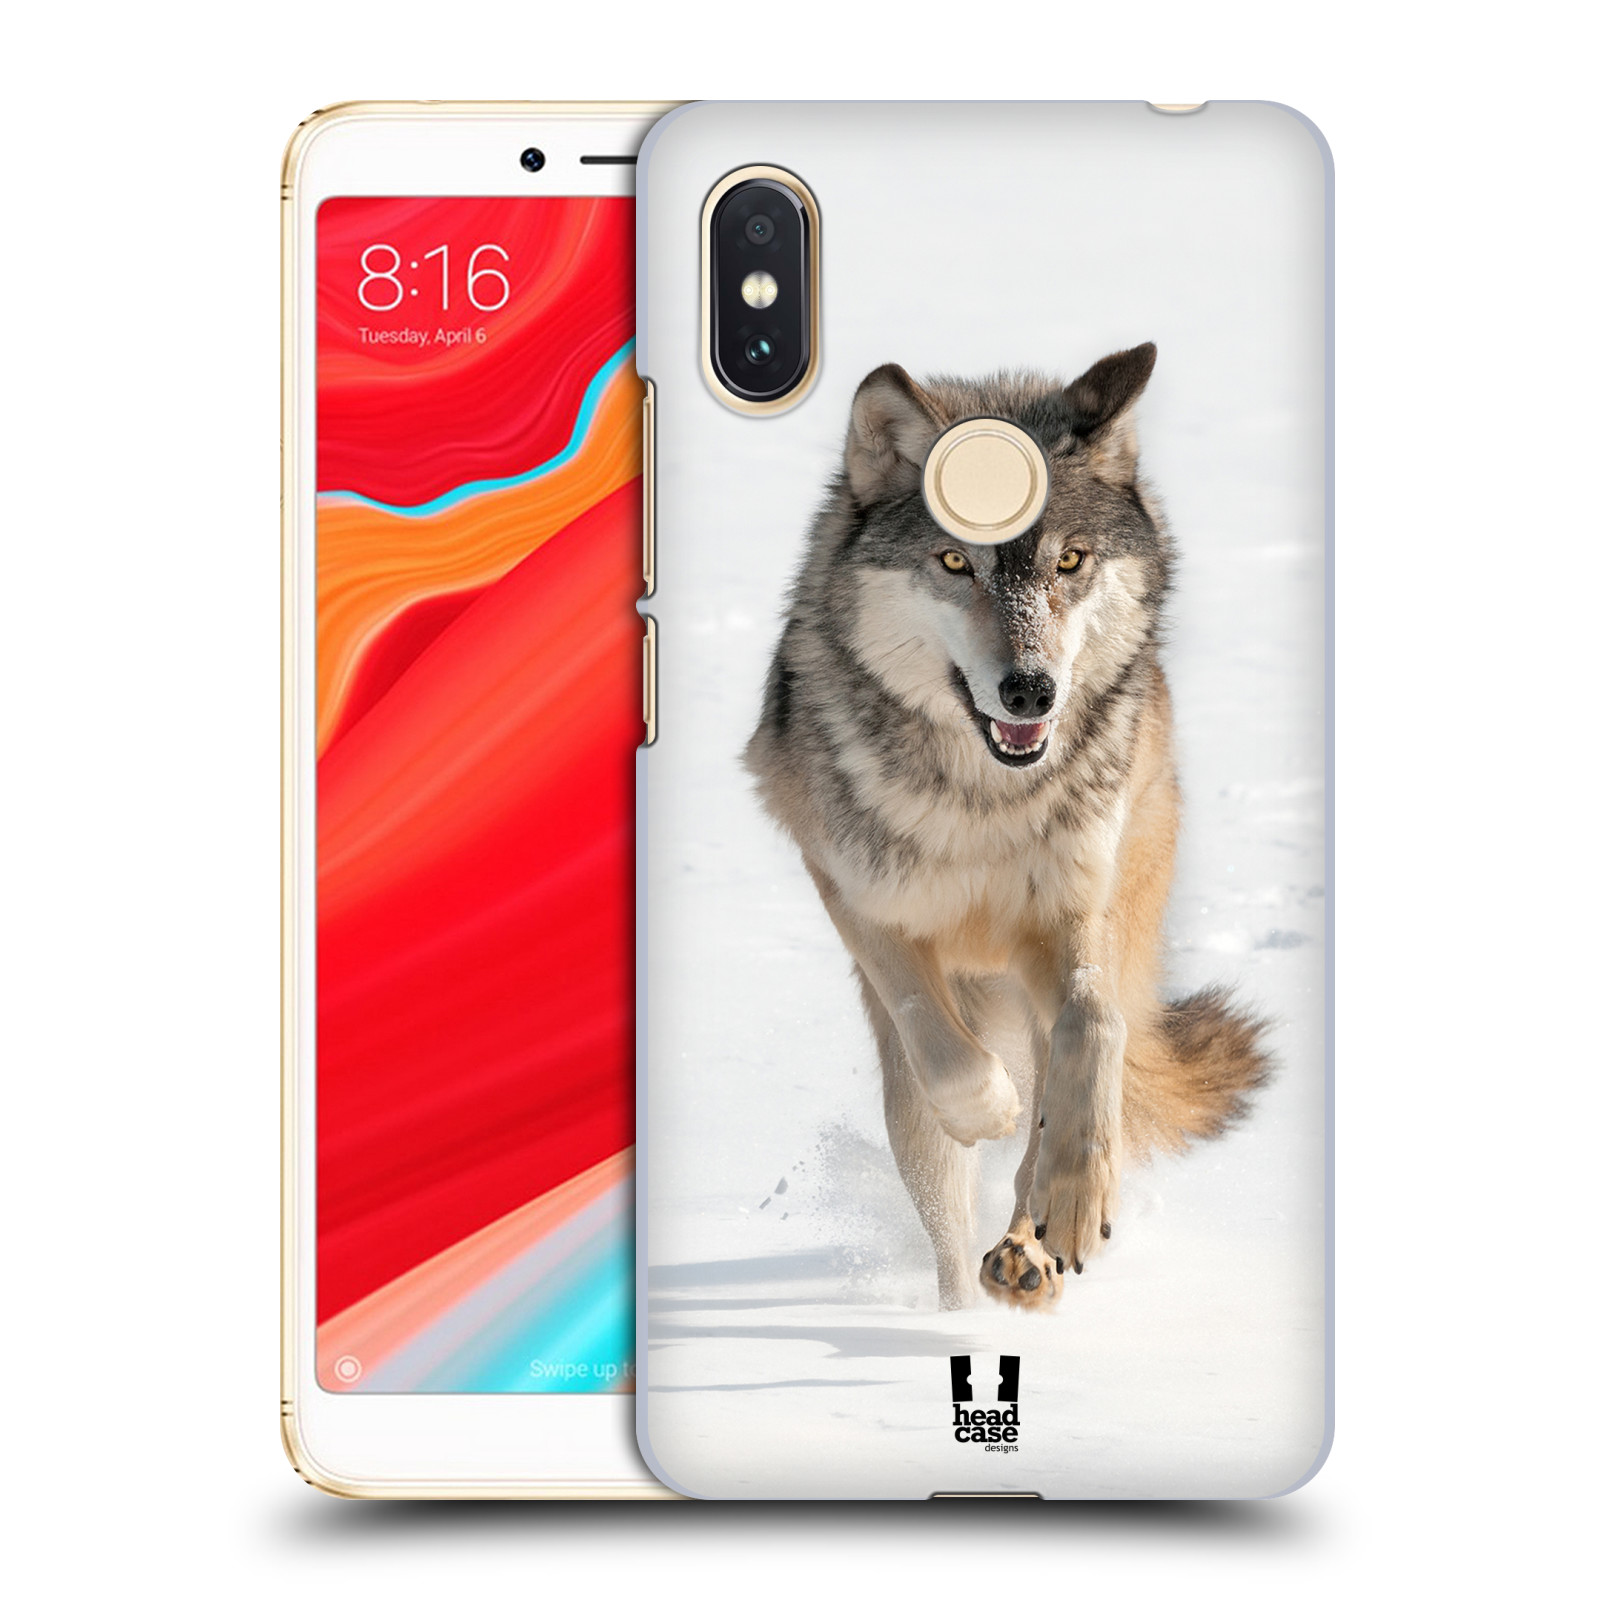 HEAD CASE plastový obal na mobil Xiaomi Redmi S2 vzor Divočina, Divoký život a zvířata foto BĚŽÍCÍ VLK